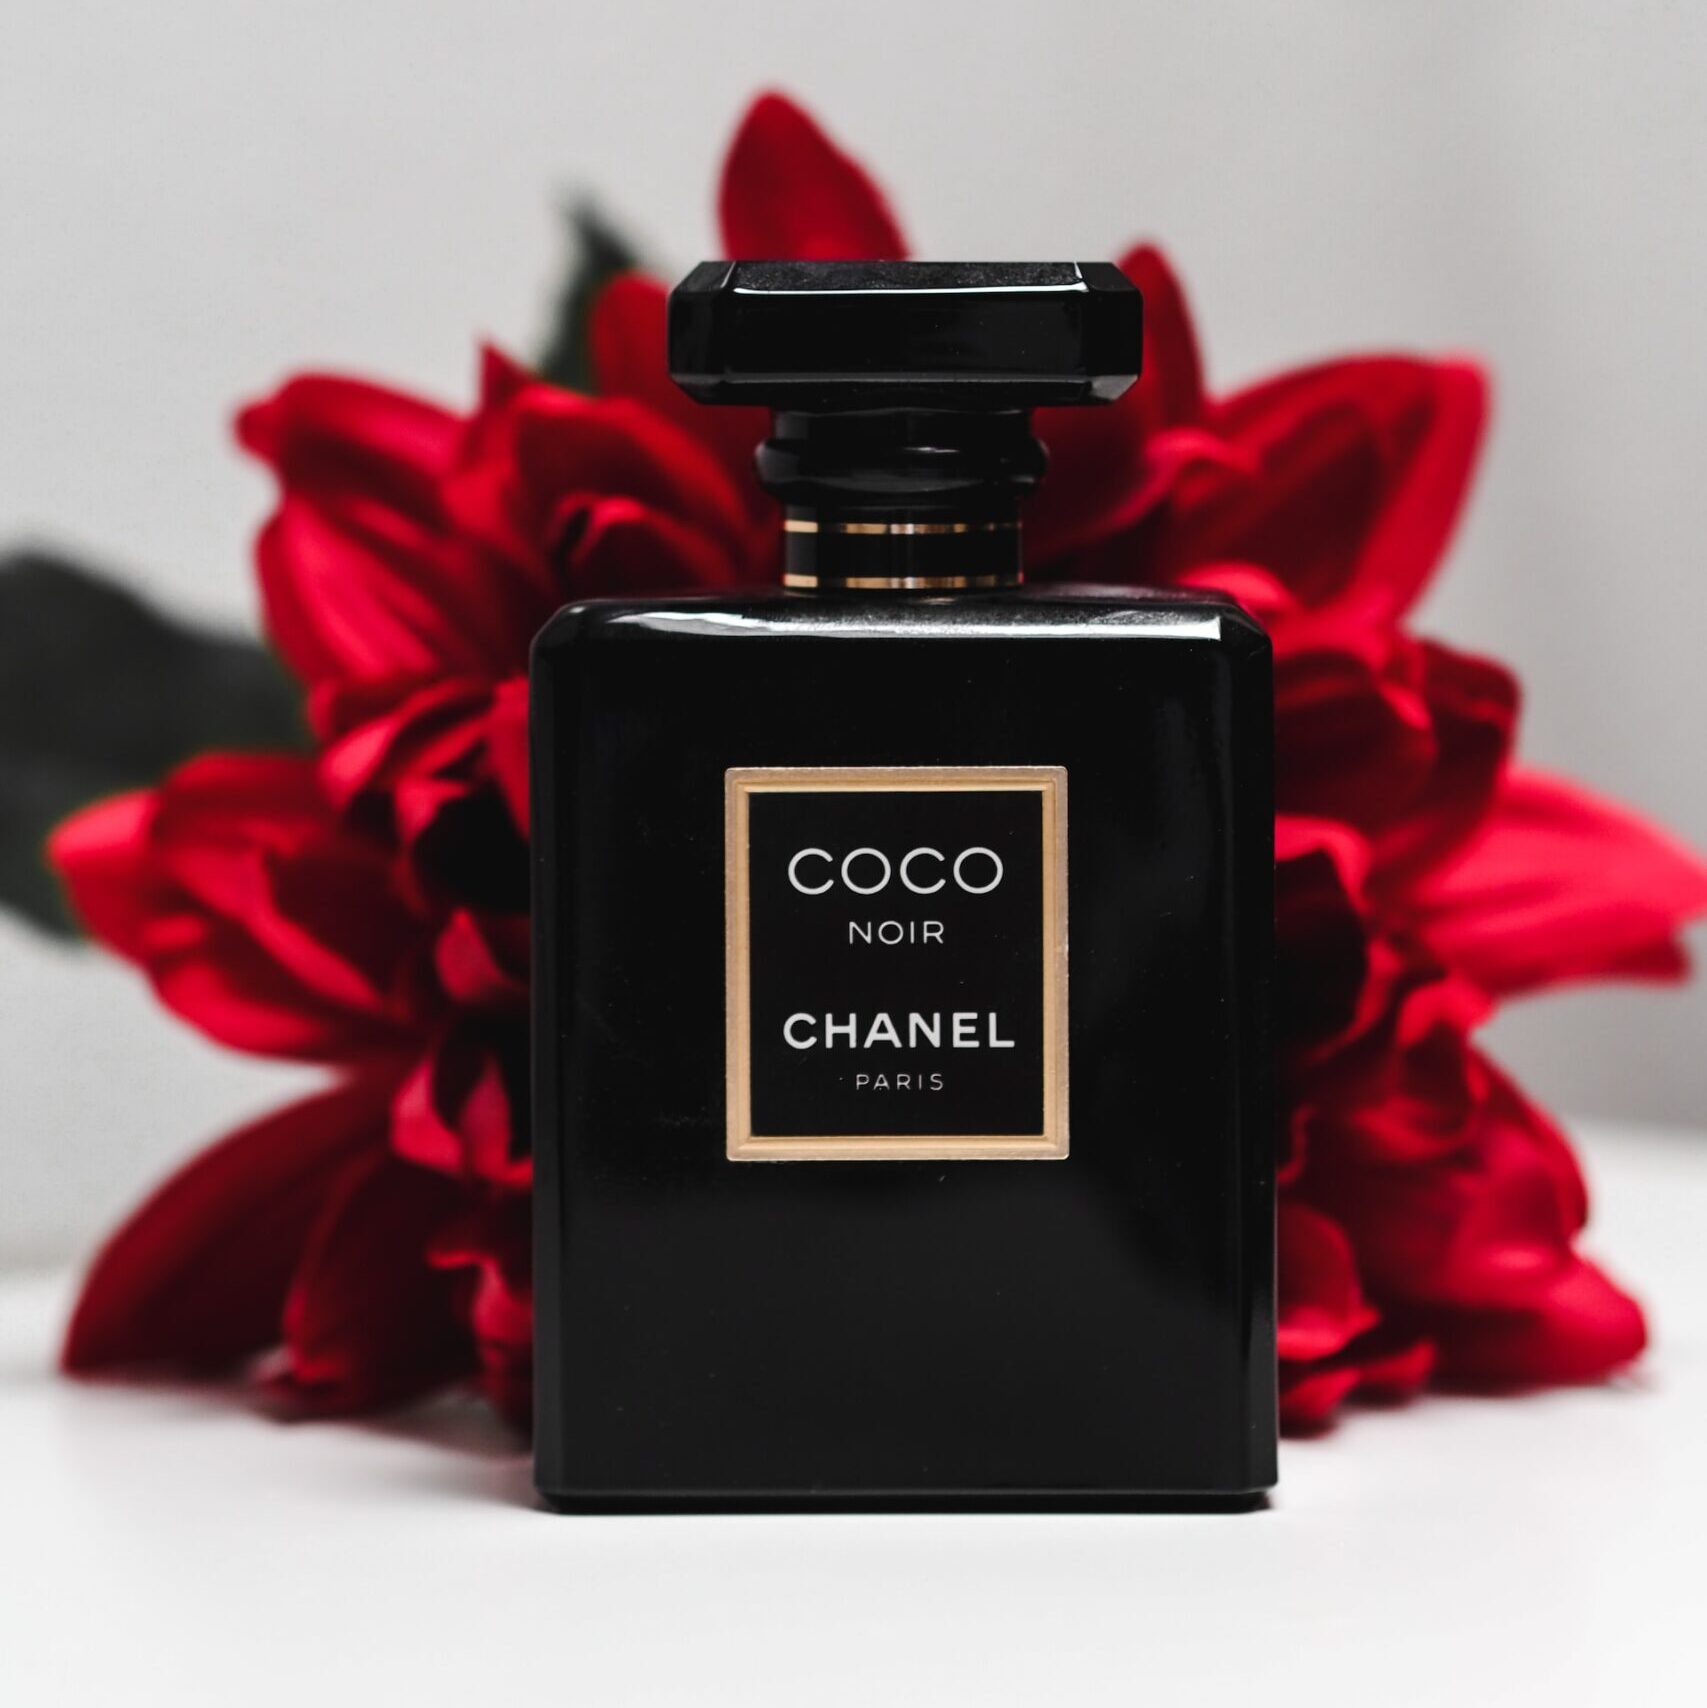 Chanel Coco Eau Parfum (100ml) - Perfect